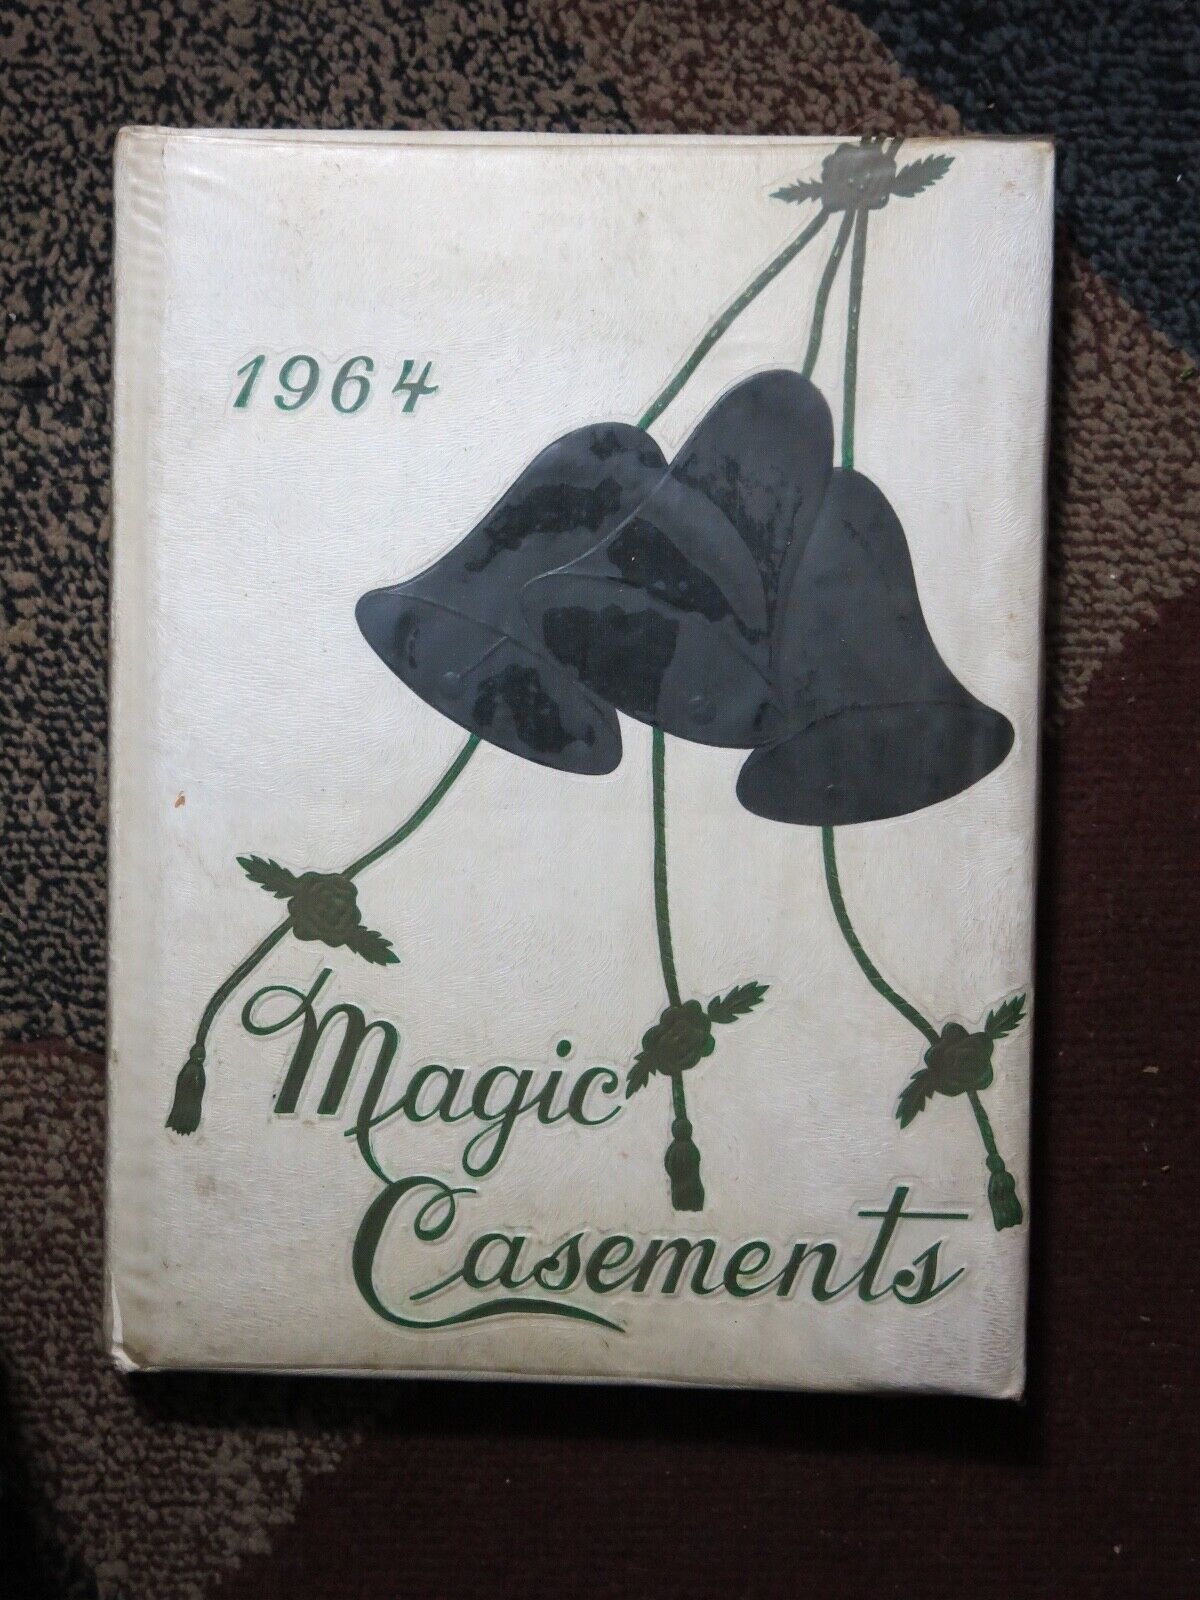 LODI HIGH SCHOOL YEARBOOK 1964 - (NEW JERSEY) - MAGIC CASEMENTS